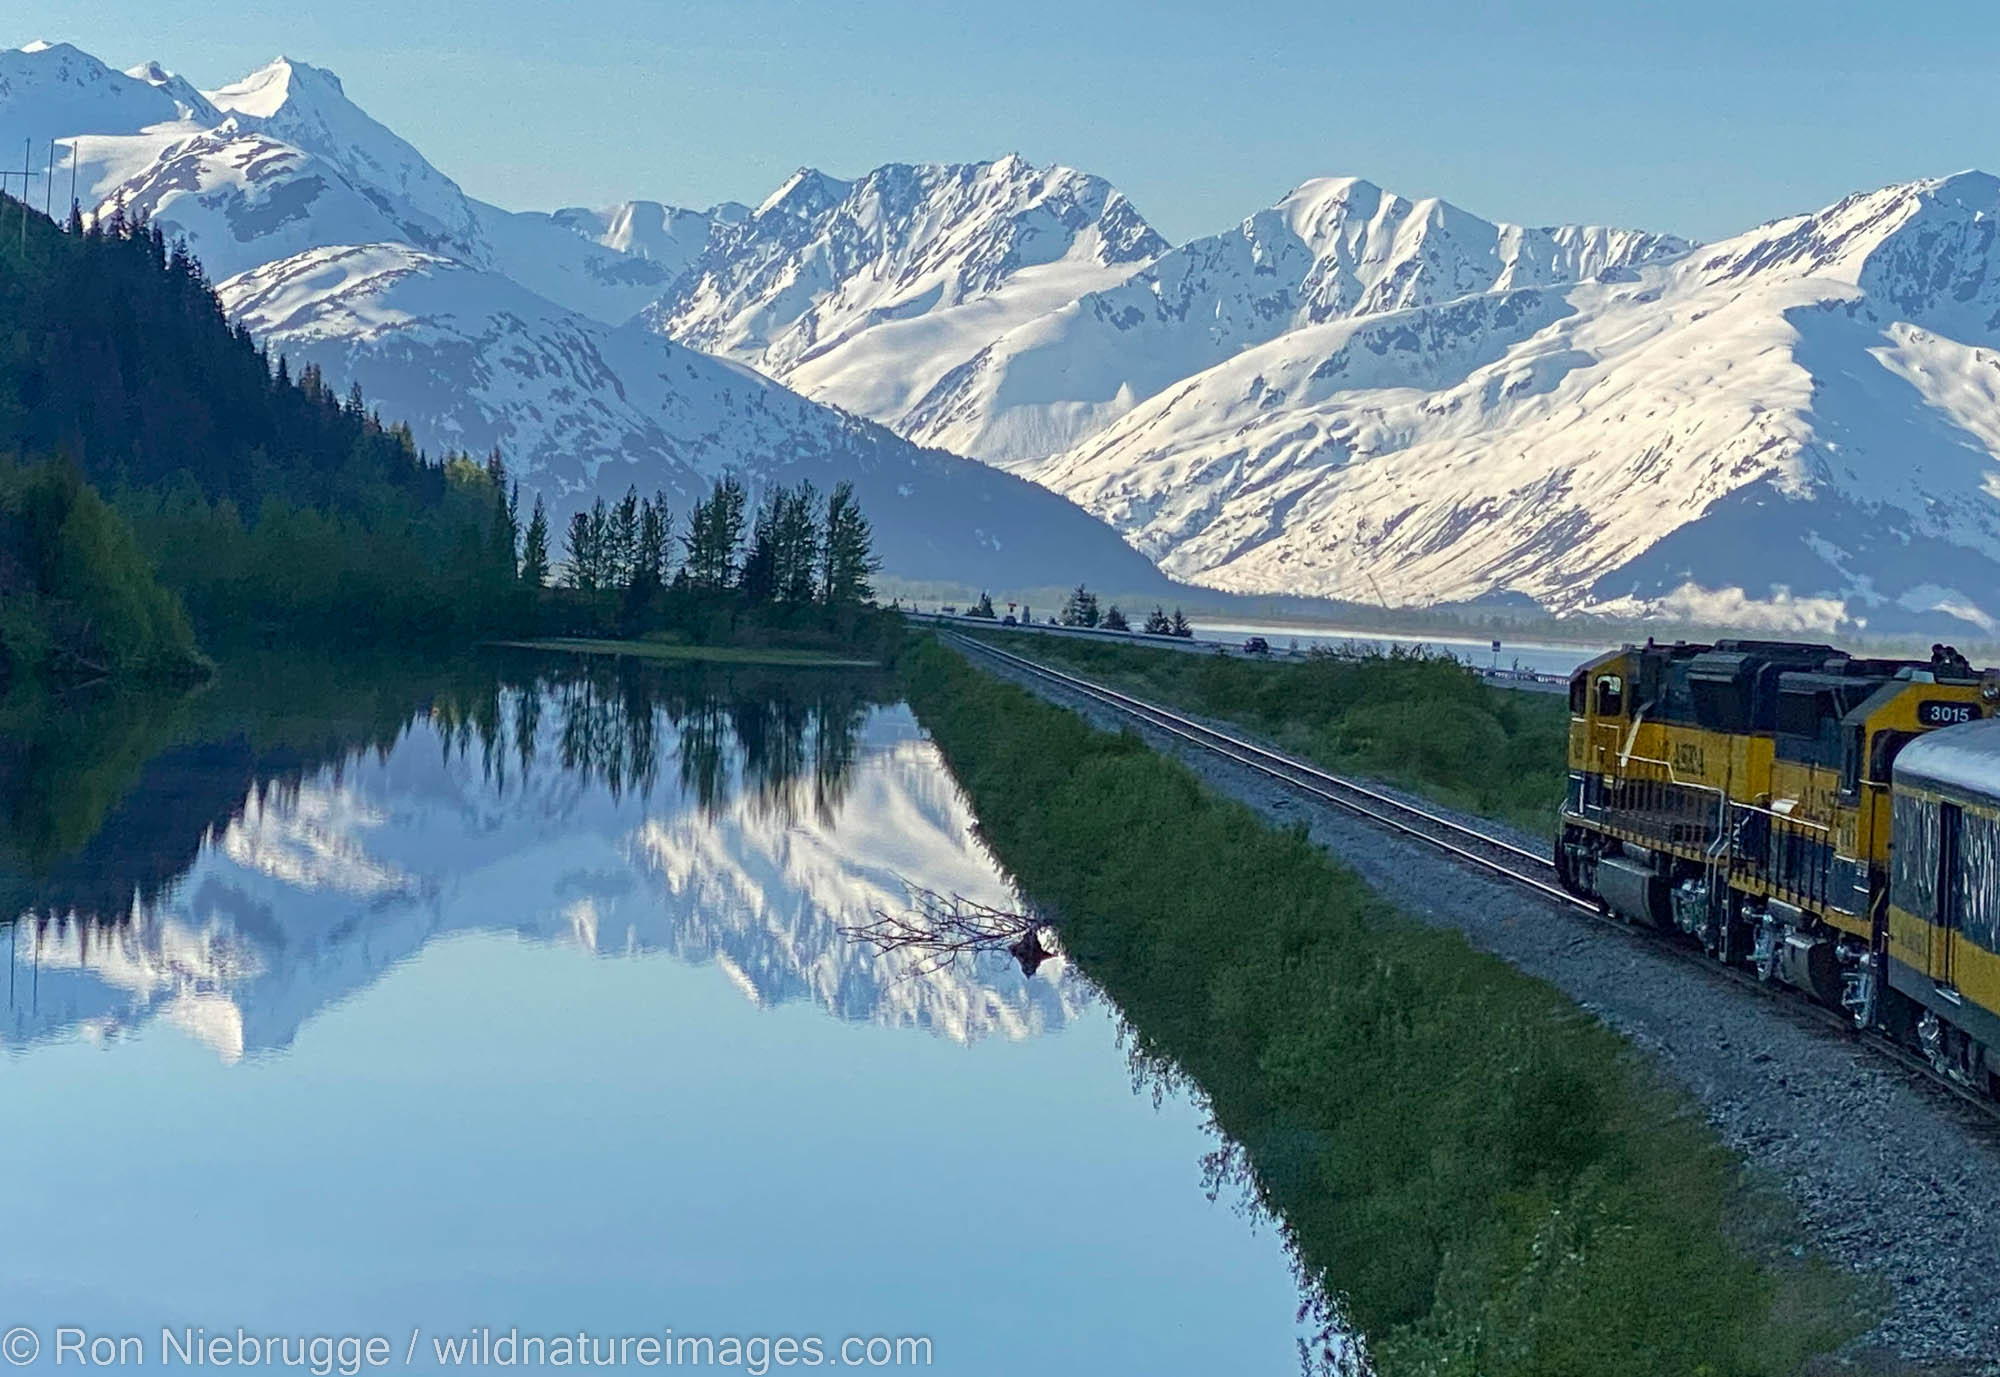 View from Alaska Railroad.  Iphone.